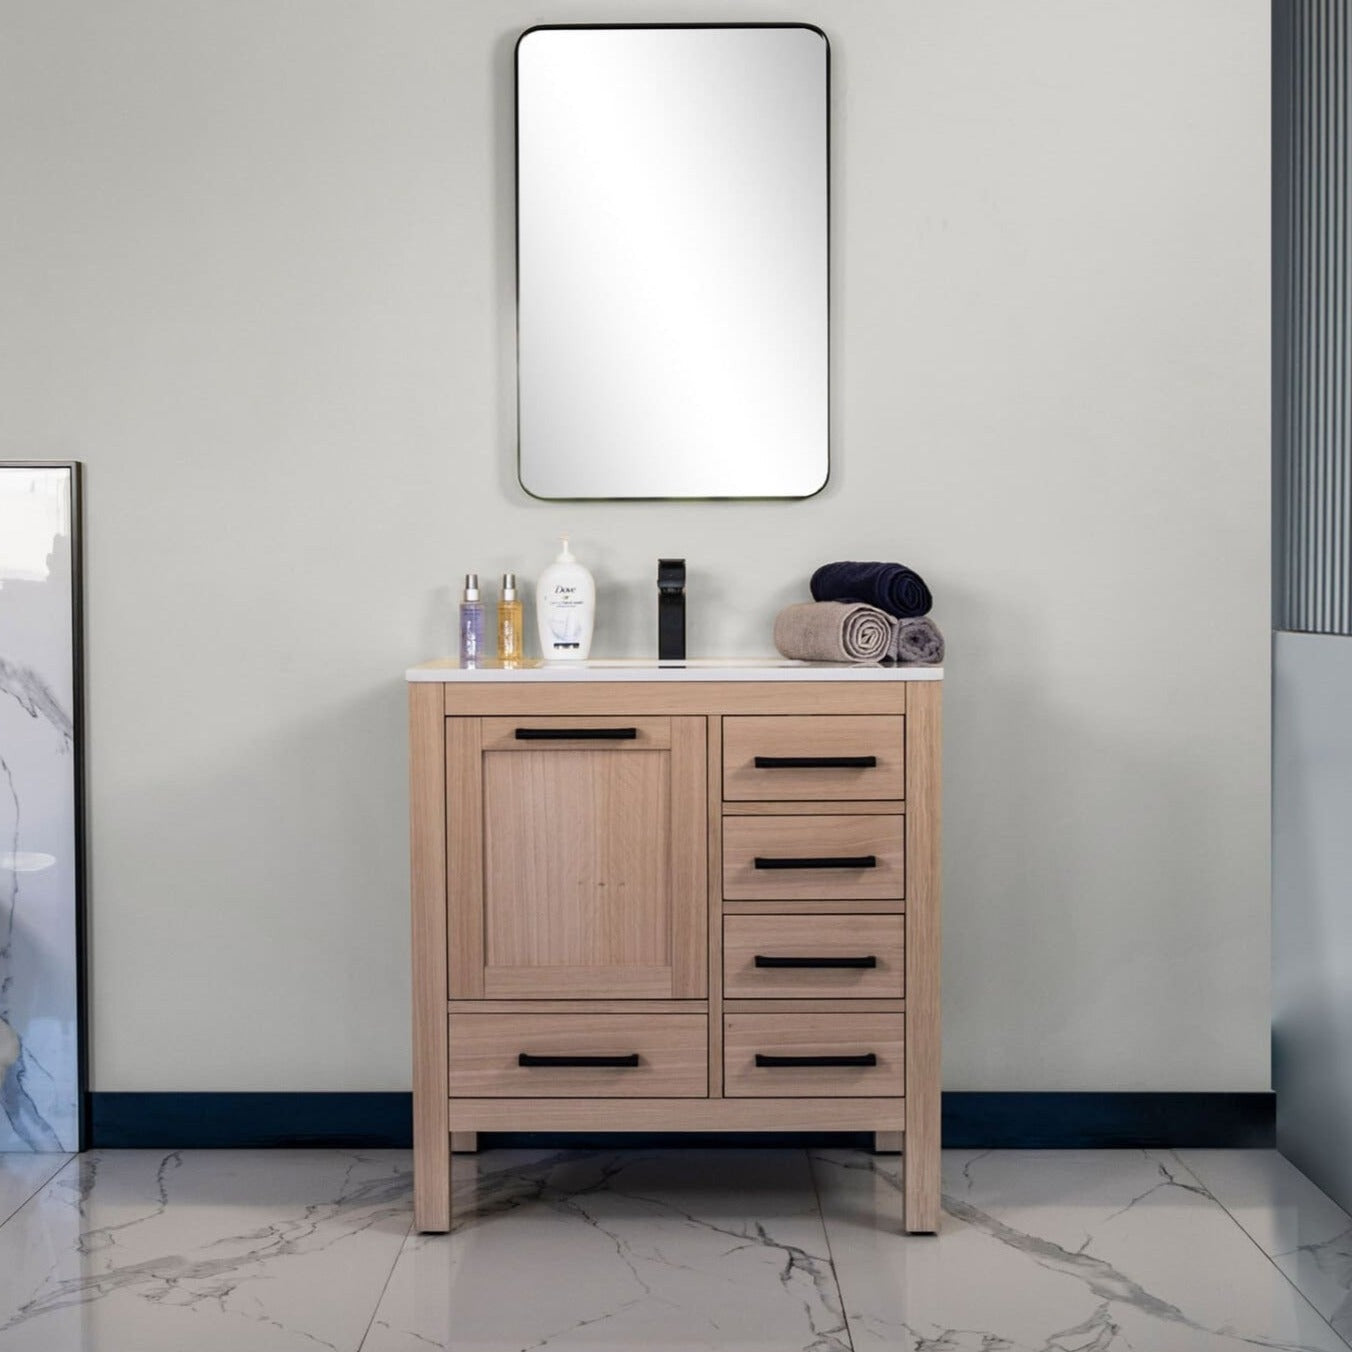 Ahley Bathroom Vanity Homelero 30"  #size_30"  #color_natural oak  #hardware_black